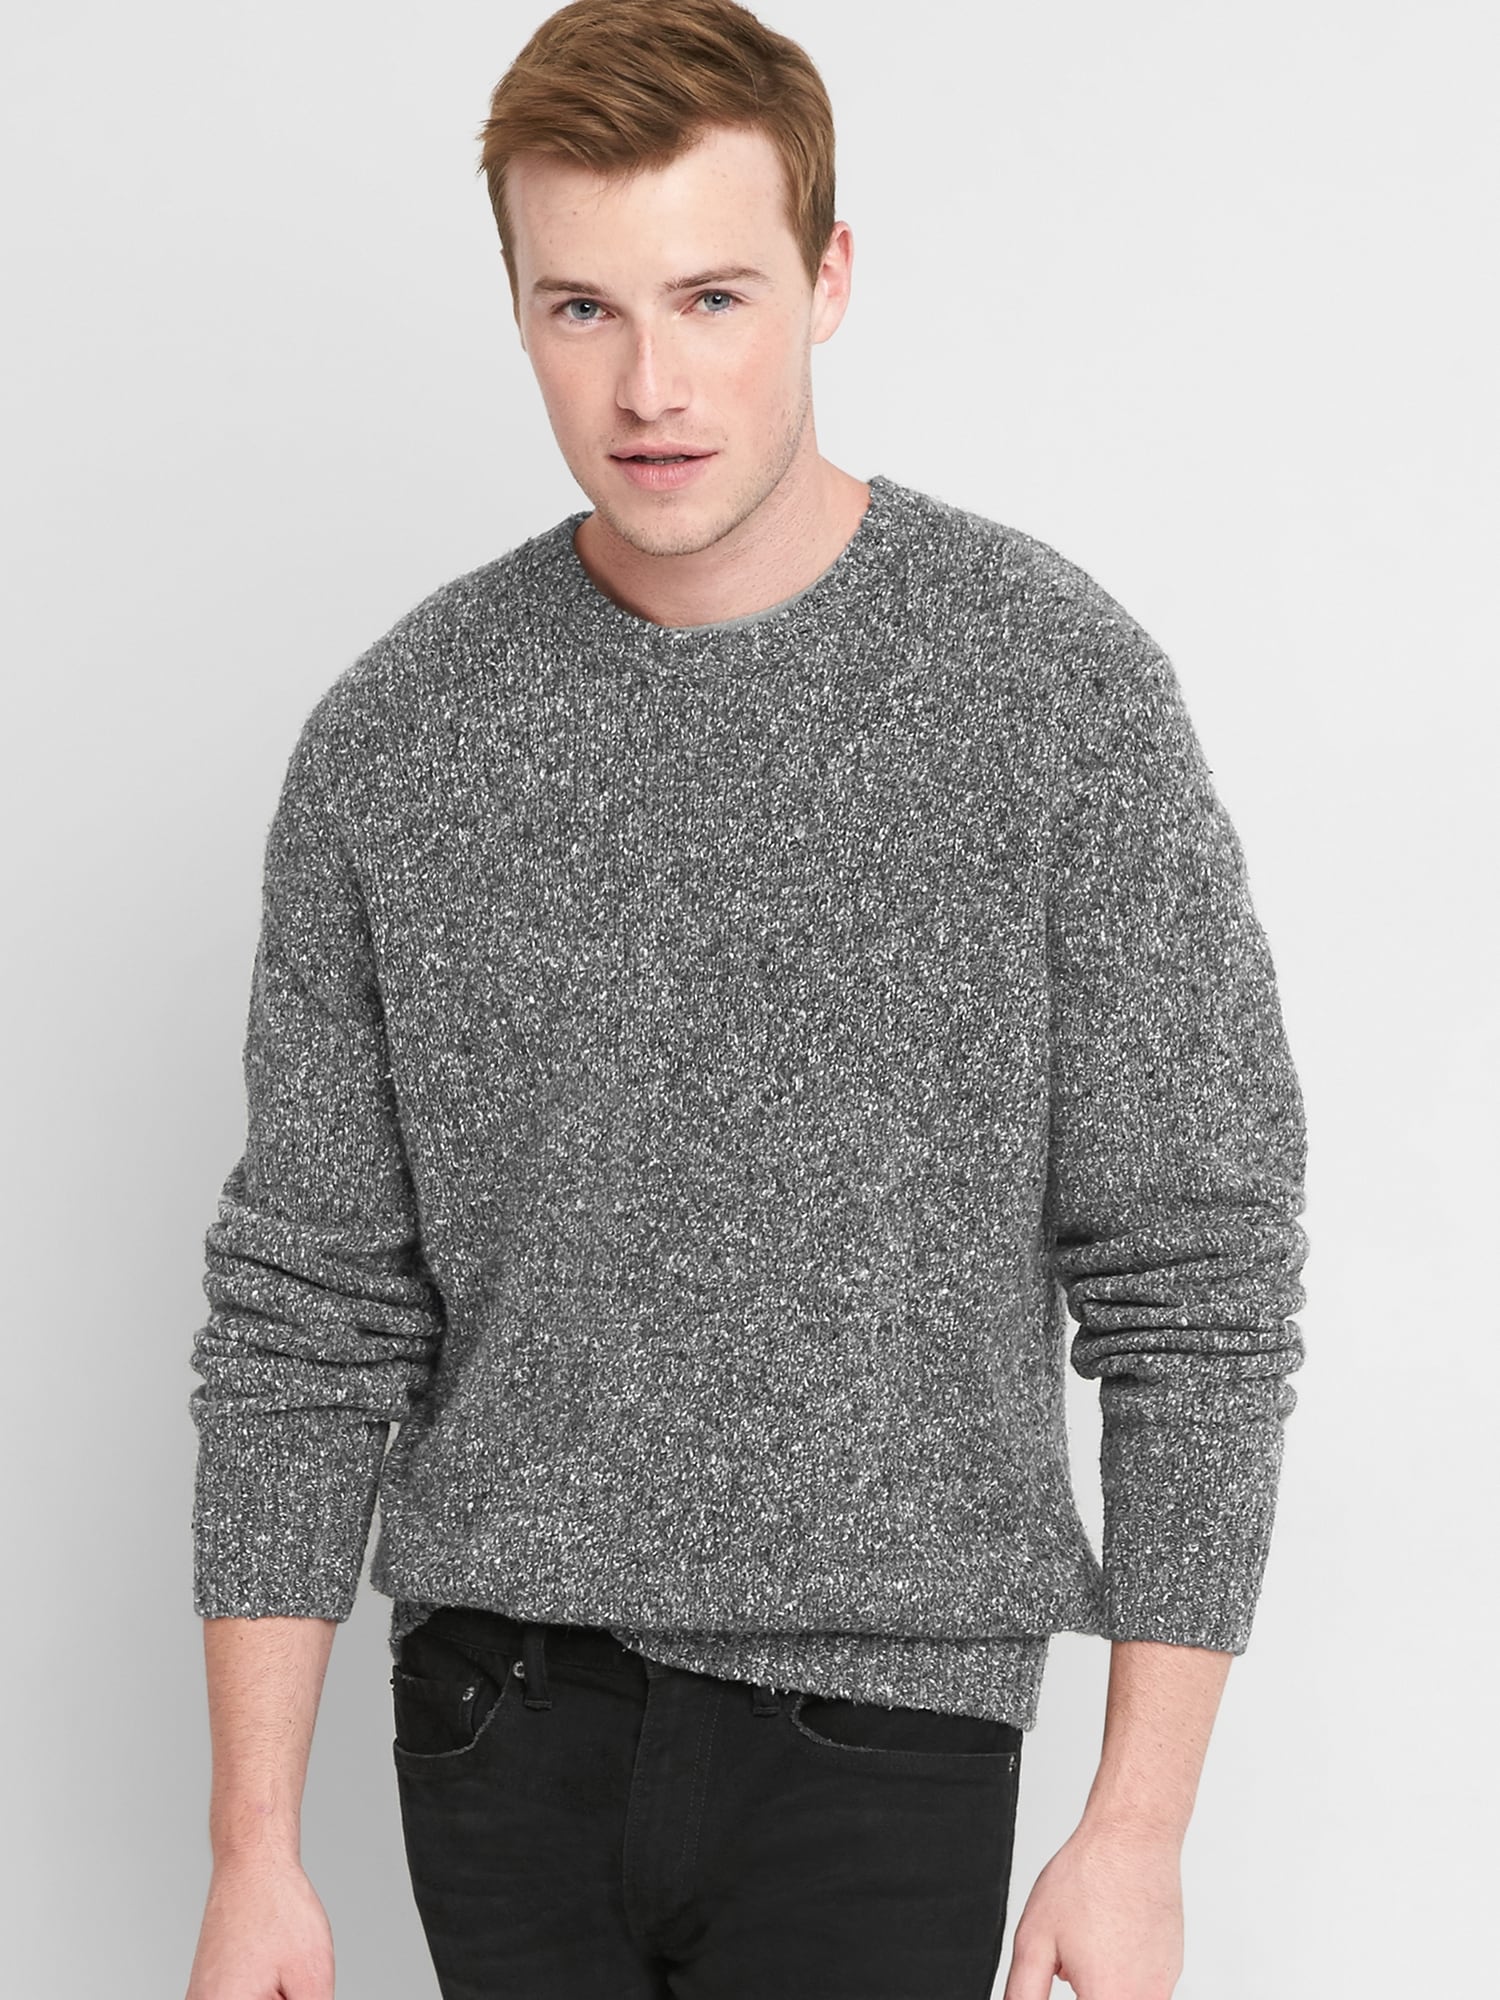 Donegal crewneck sweater | Gap